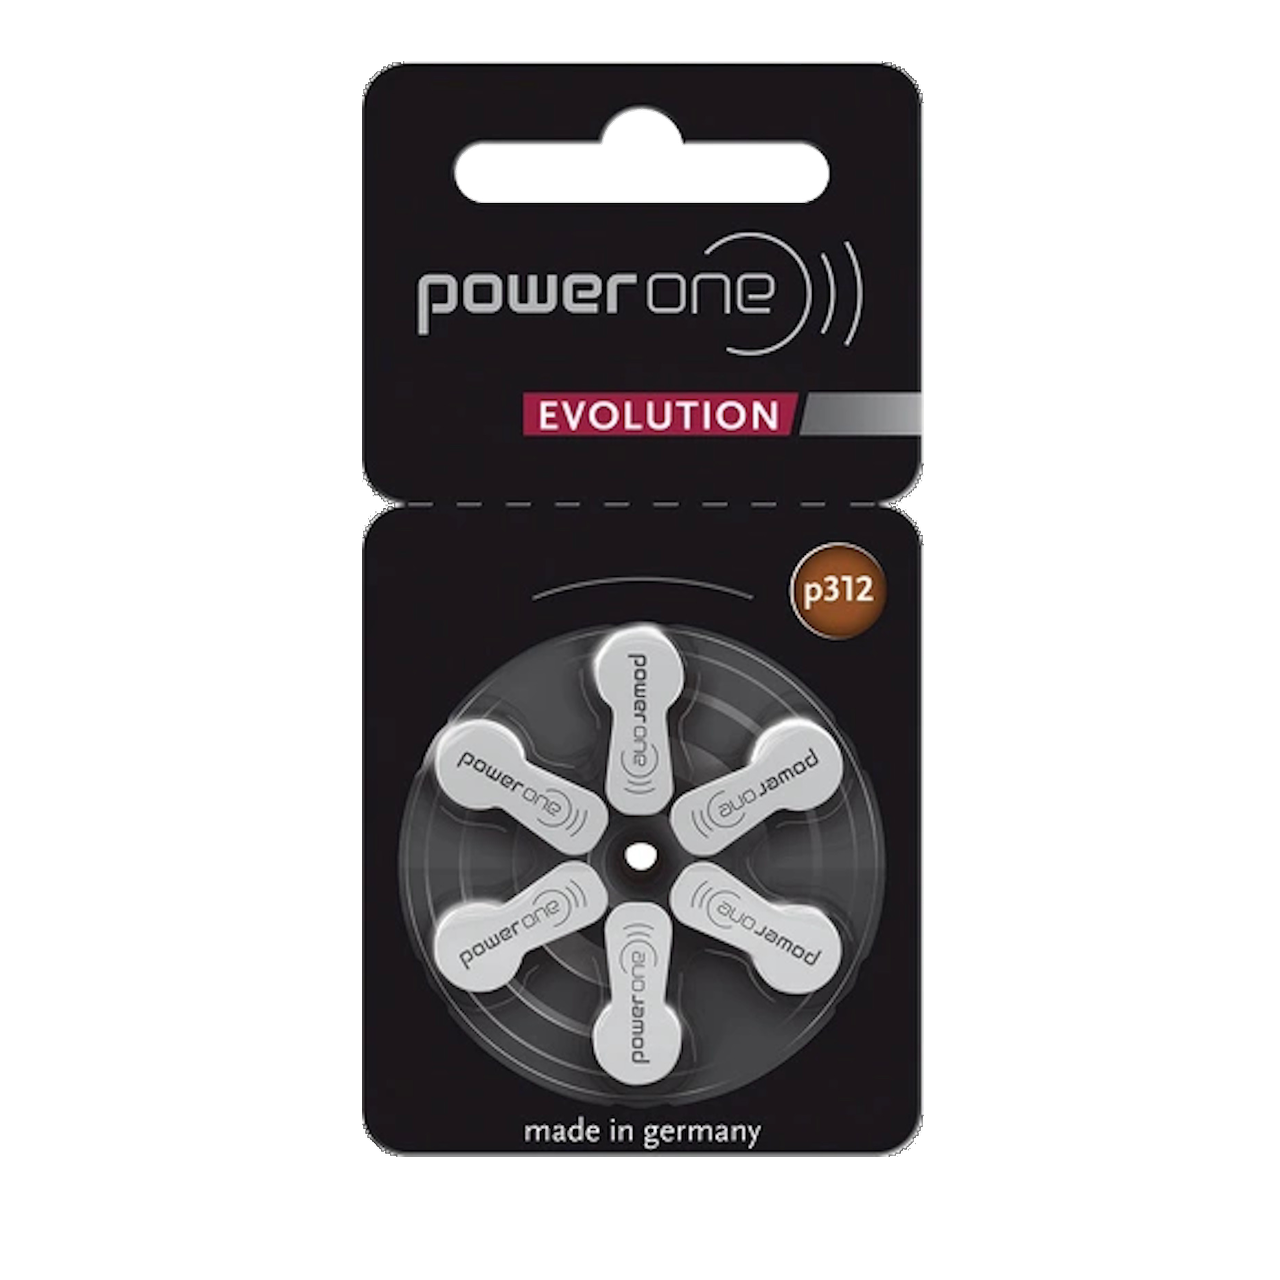 Die Power One EVOLUTION p312 1 Pack (6 Zellen) Hörgerätebatterien sind Premium Hörgerätebatterien der Firma Varta. 